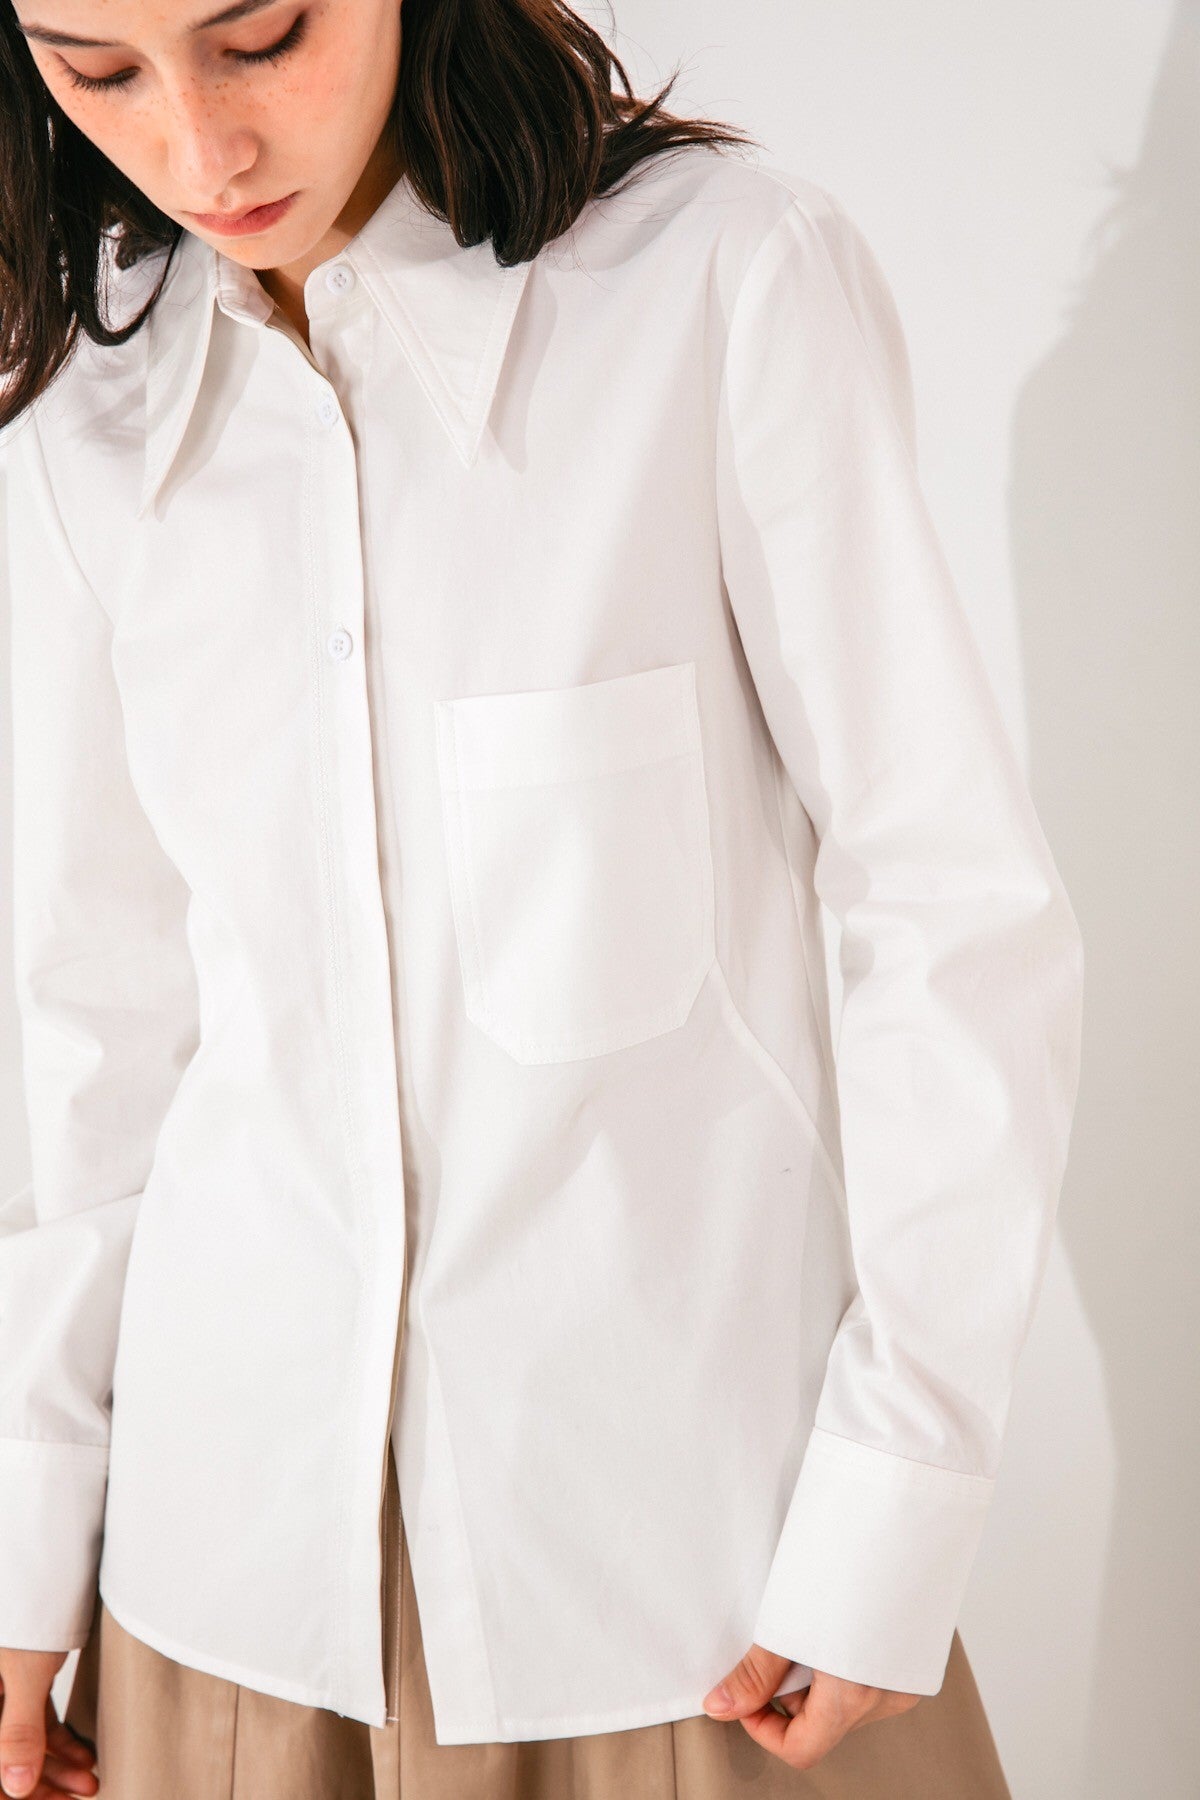 SKYE San Francisco SF shop ethical modern minimalist quality women clothing fashion Audrey Shirt white 4